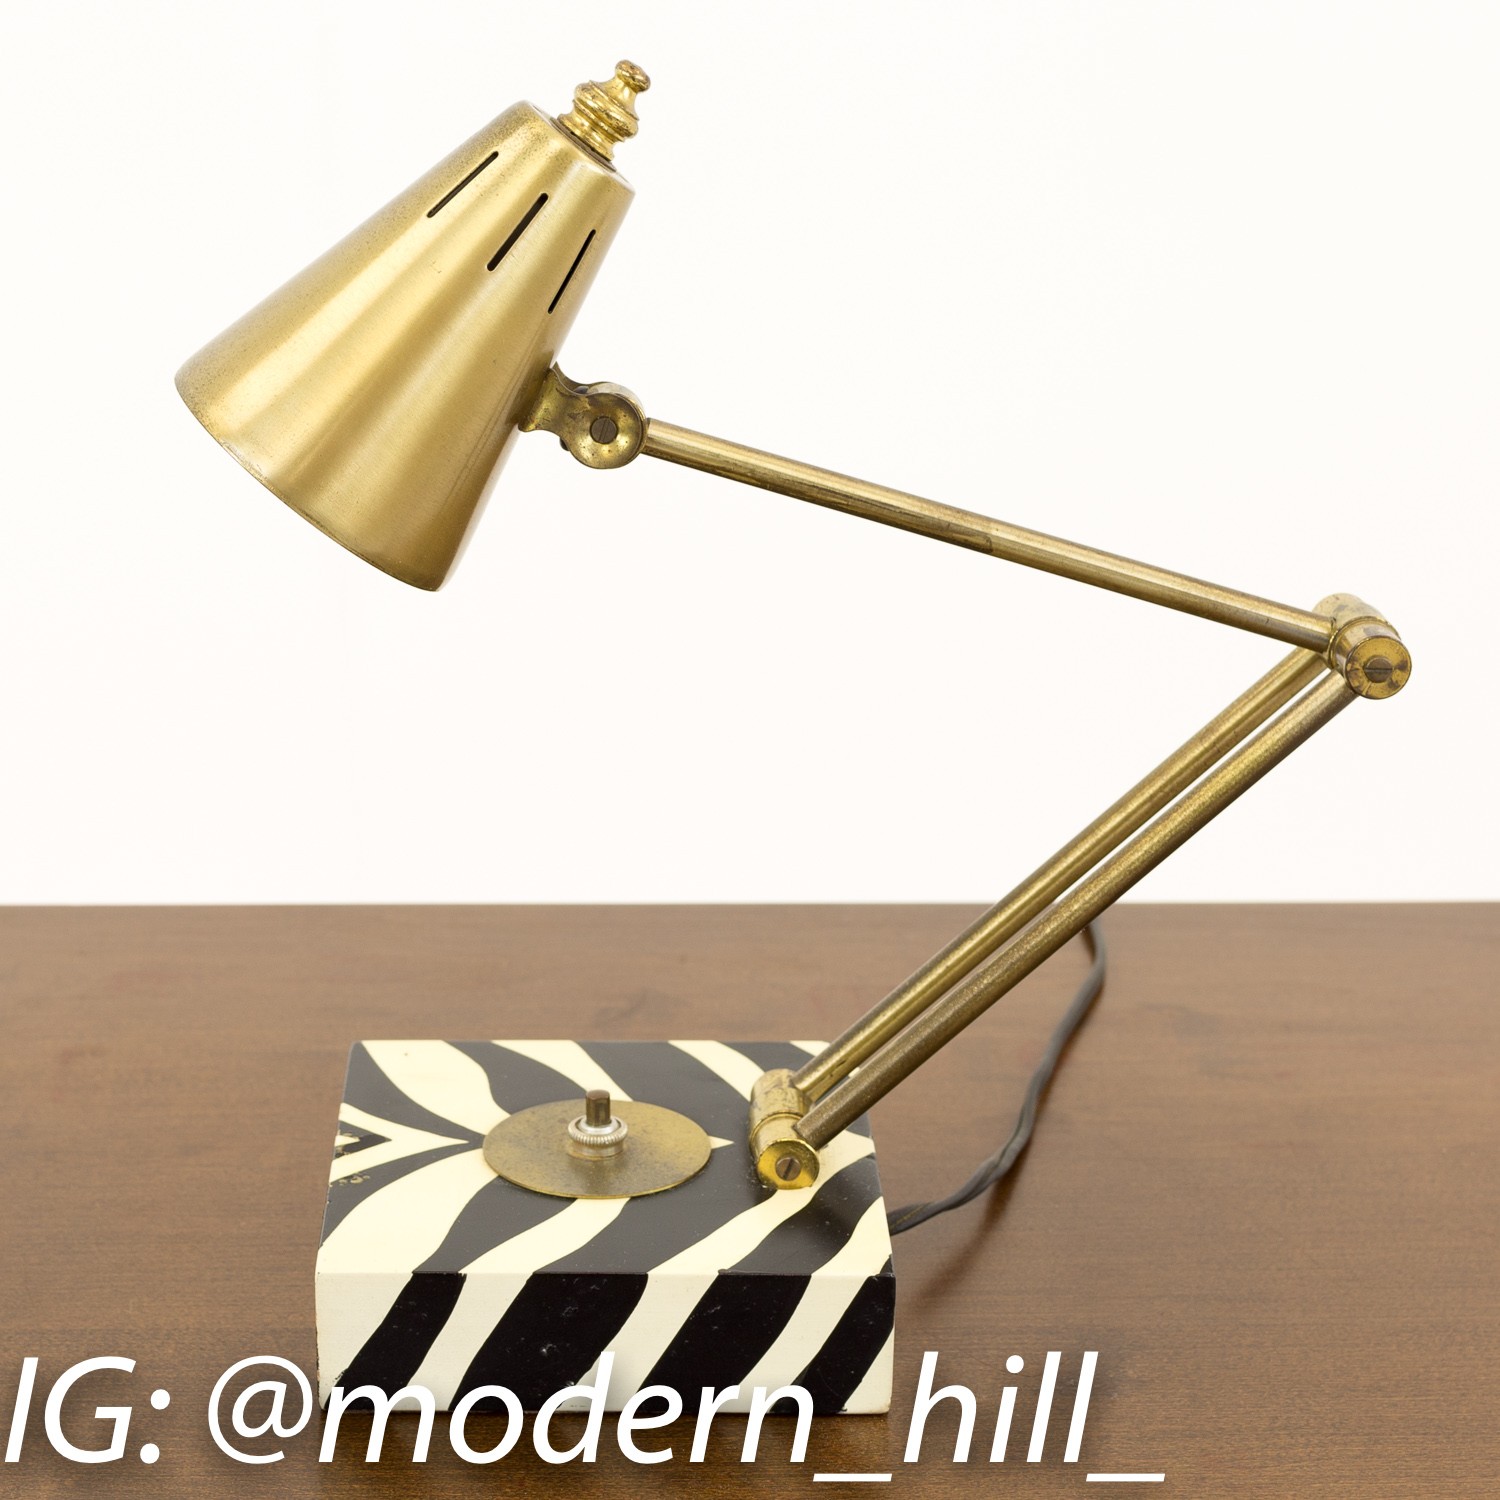 Gerald Thurston Style Mid Century Articulating Brass Black and White Zebra Stripe Desk Table Lamp